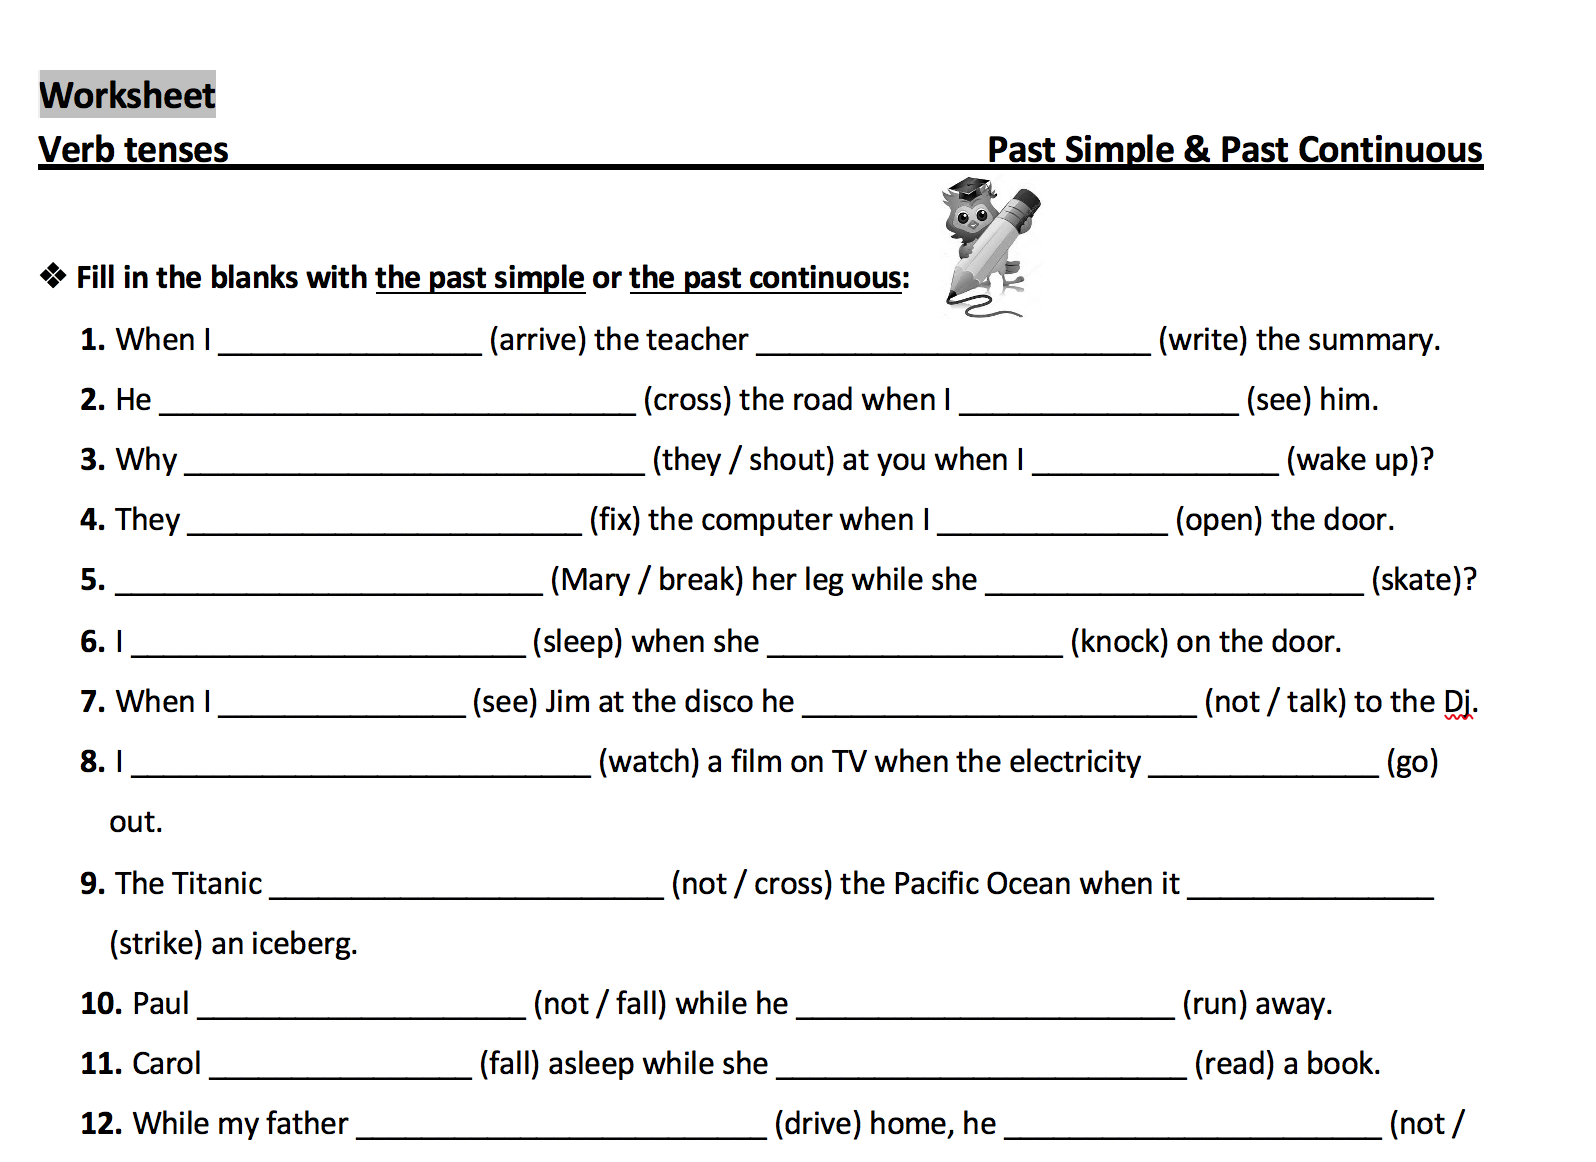 Past simple past continuous exercise pdf. Past simple past Continuous exercise. Past simple Tense и past Continuous Tense. Past Continuous в английском языке Worksheets. Past Continuous when past simple Worksheets.